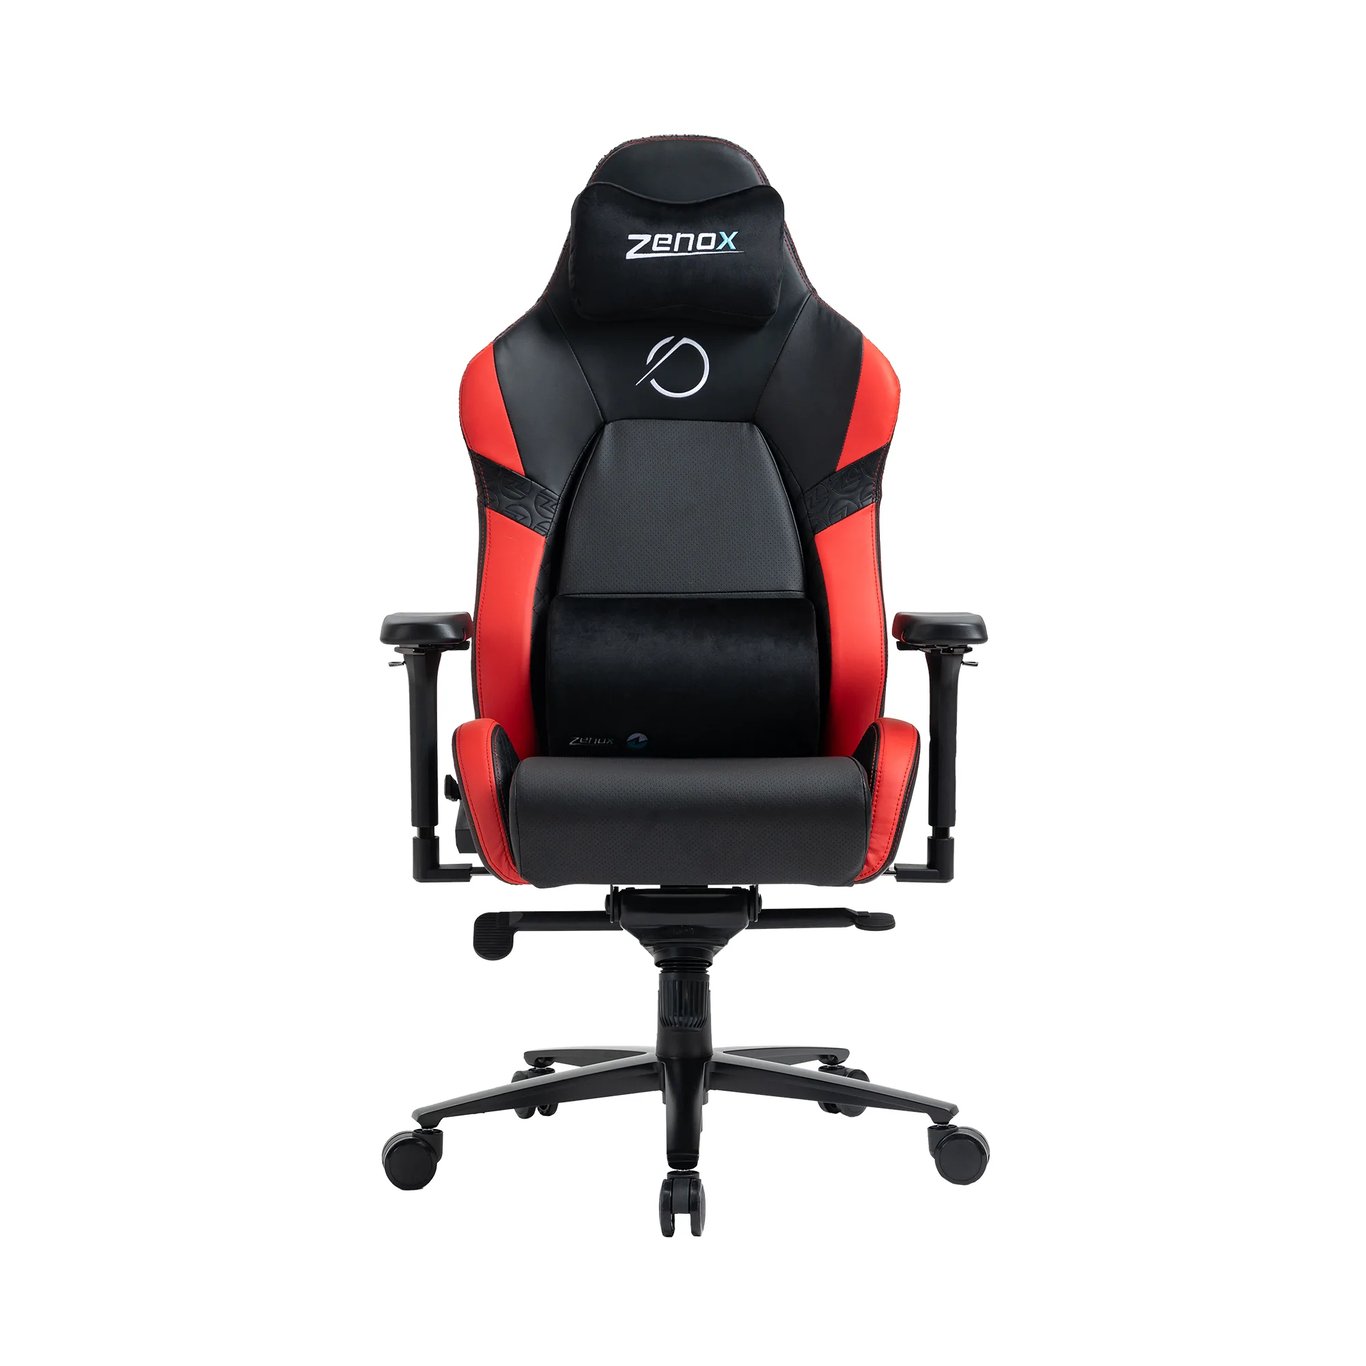 Zenox Jupiter-MK2 Racing Chair  - Leather/Red /-1